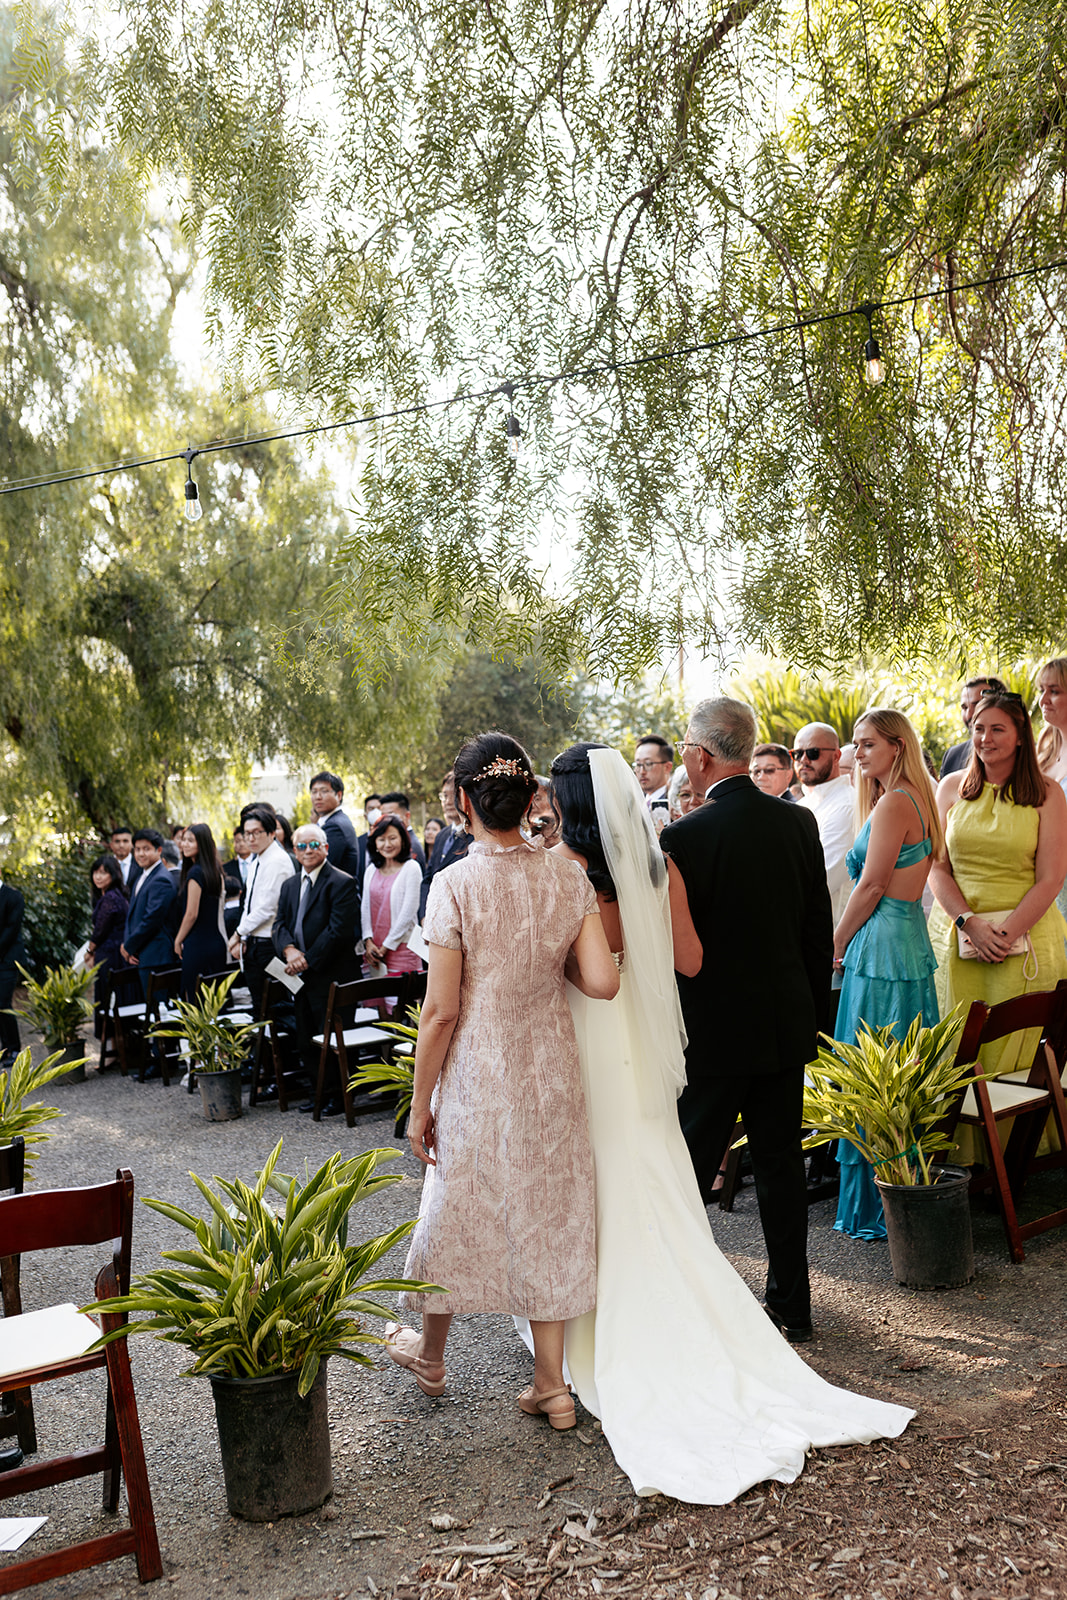 wedding the greenhouse pnoc orange county california groomsmen suits bridesmaid dresses mismatched summer wedding